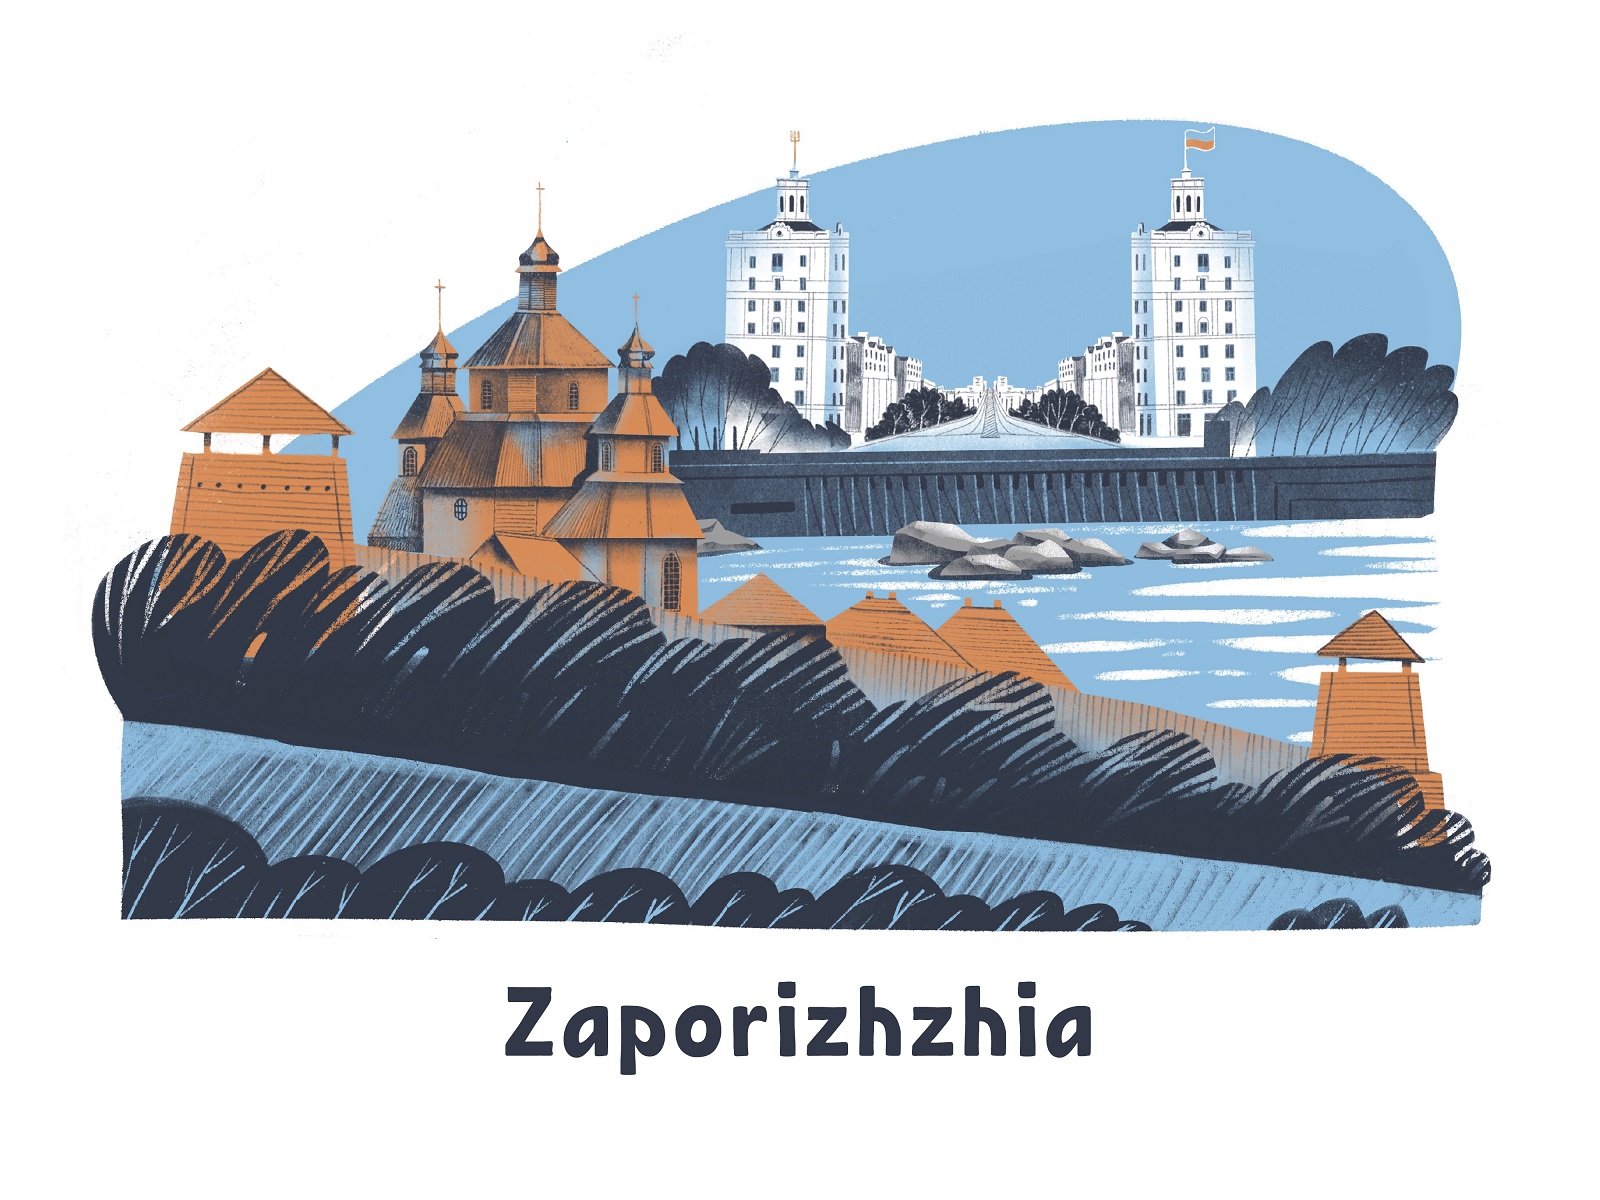 Zaporizhzhia cities of Ukraine tubikarts illustrations